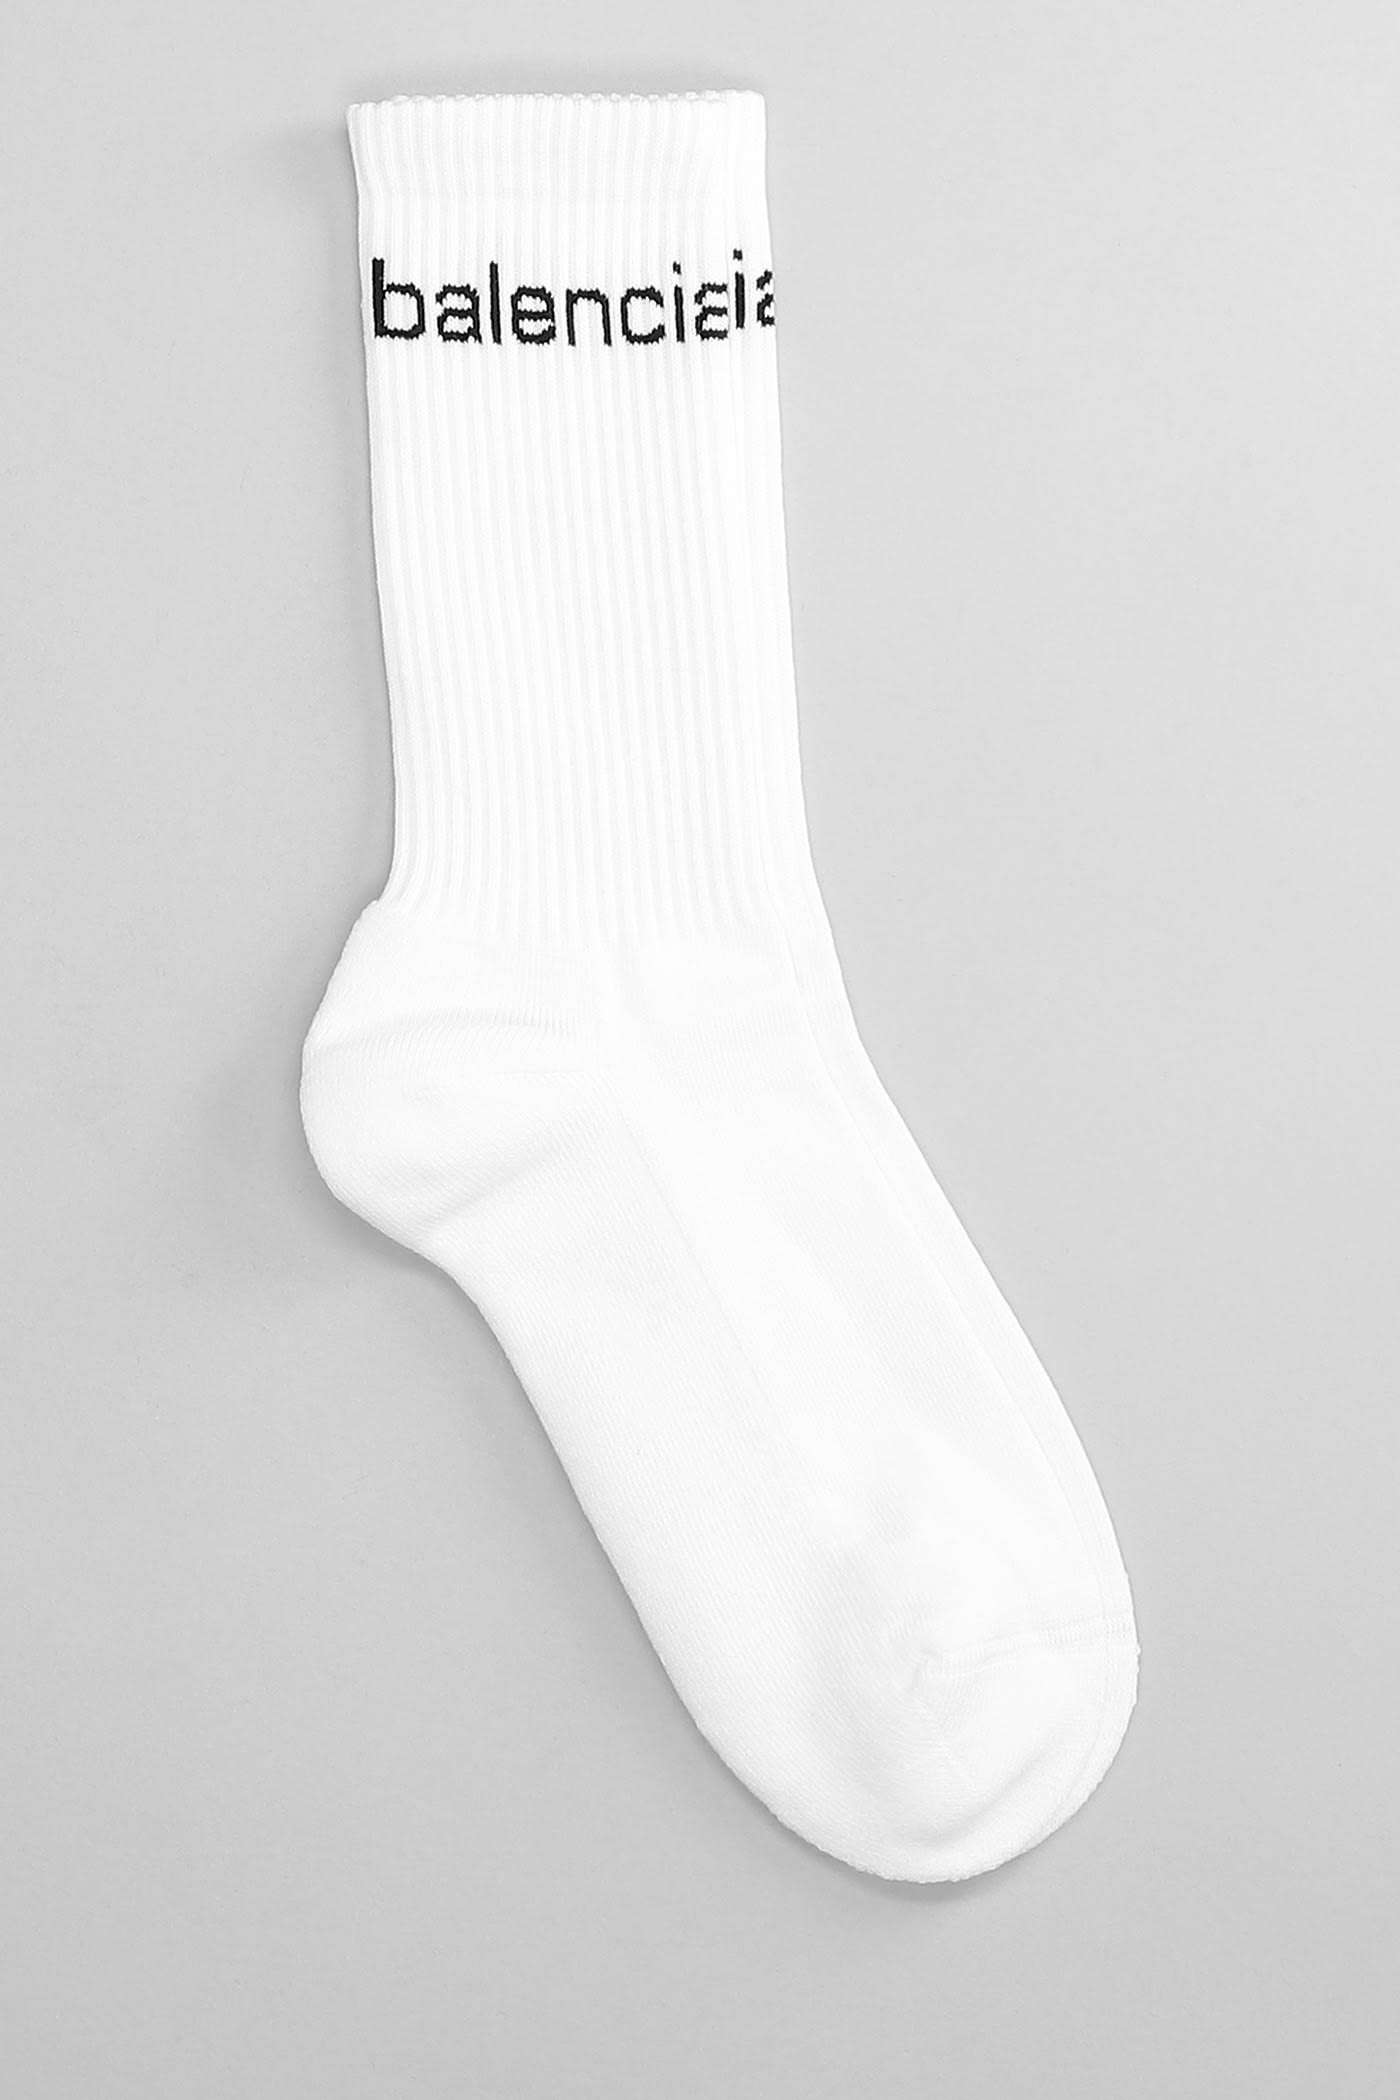 BALENCIAGA SOCKS IN WHITE COTTON